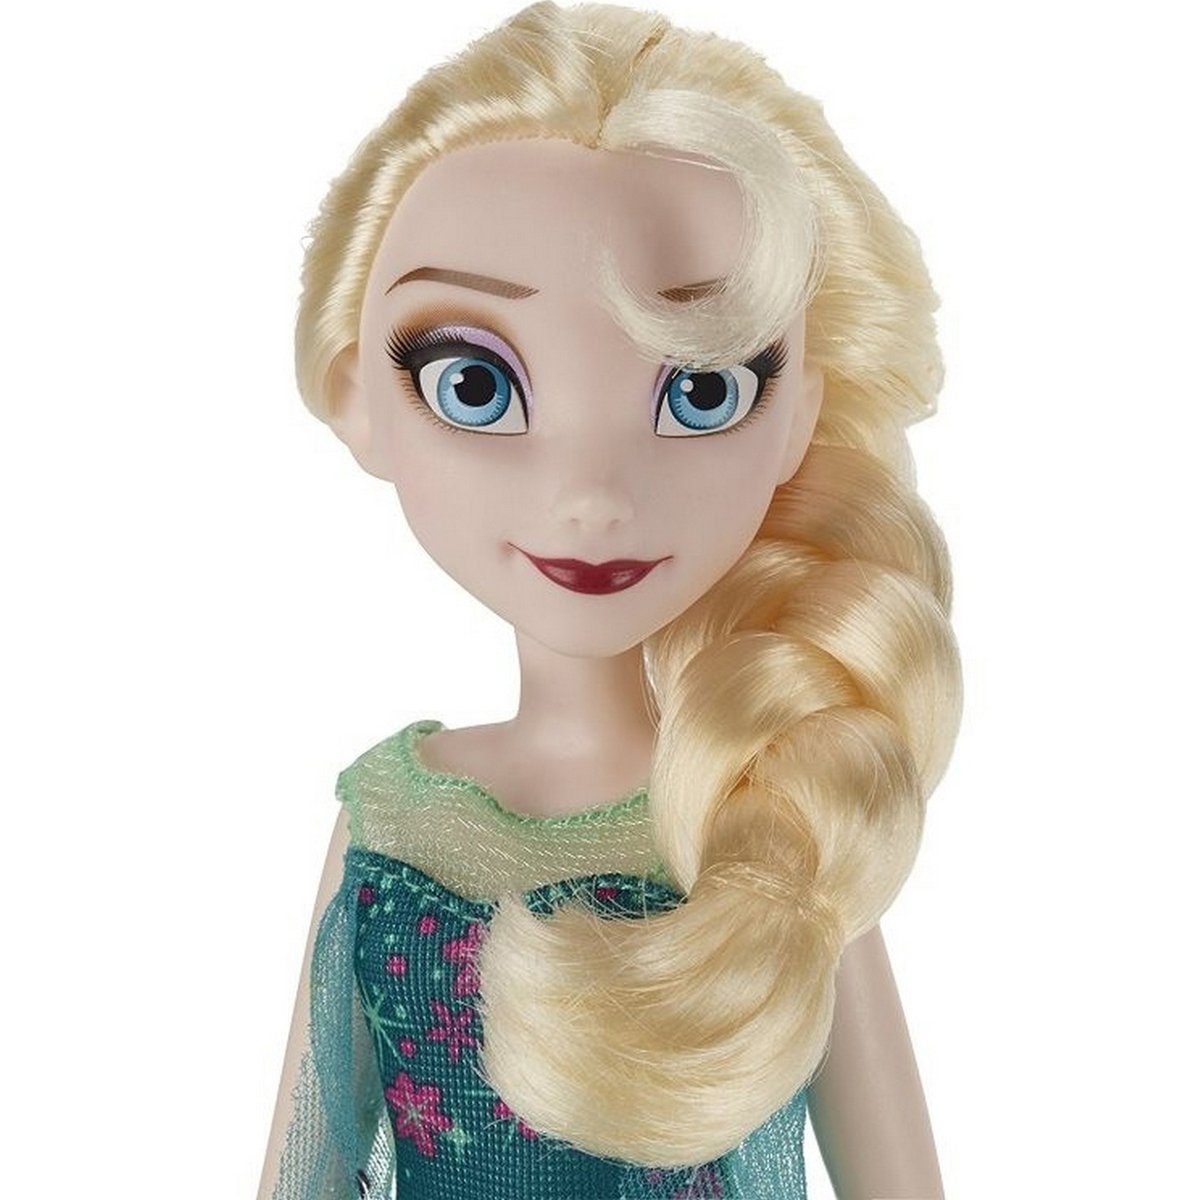 Disney Frozen Fashion Doll Elsa B5165